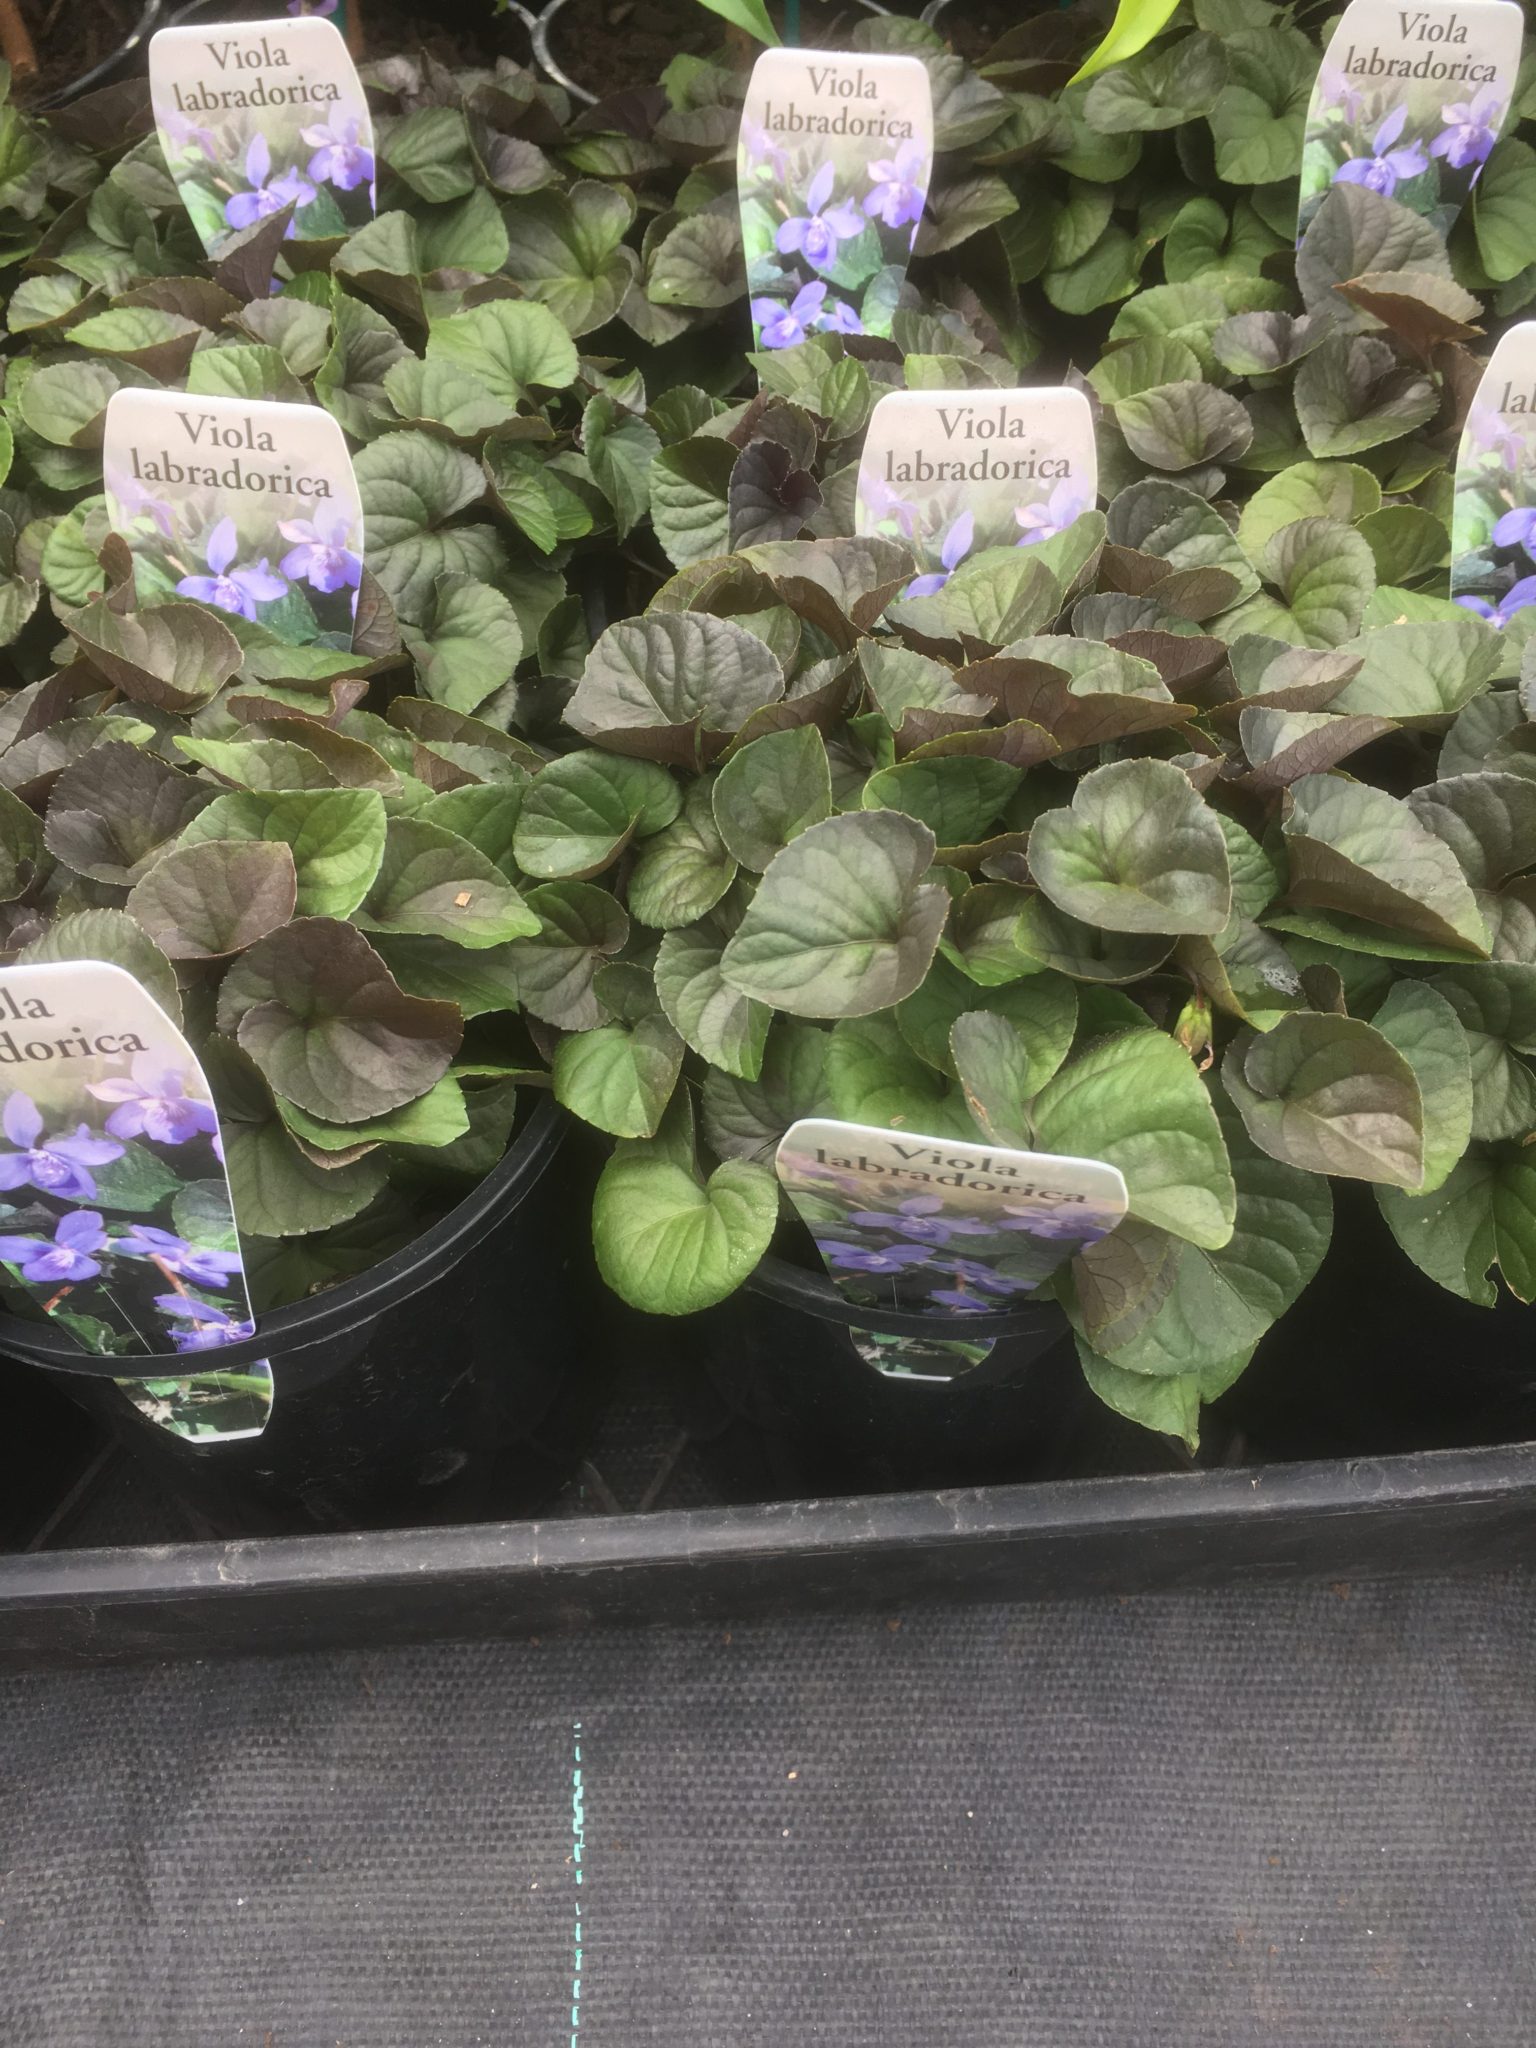 Viola labradorica -Viola riviana Purpurea